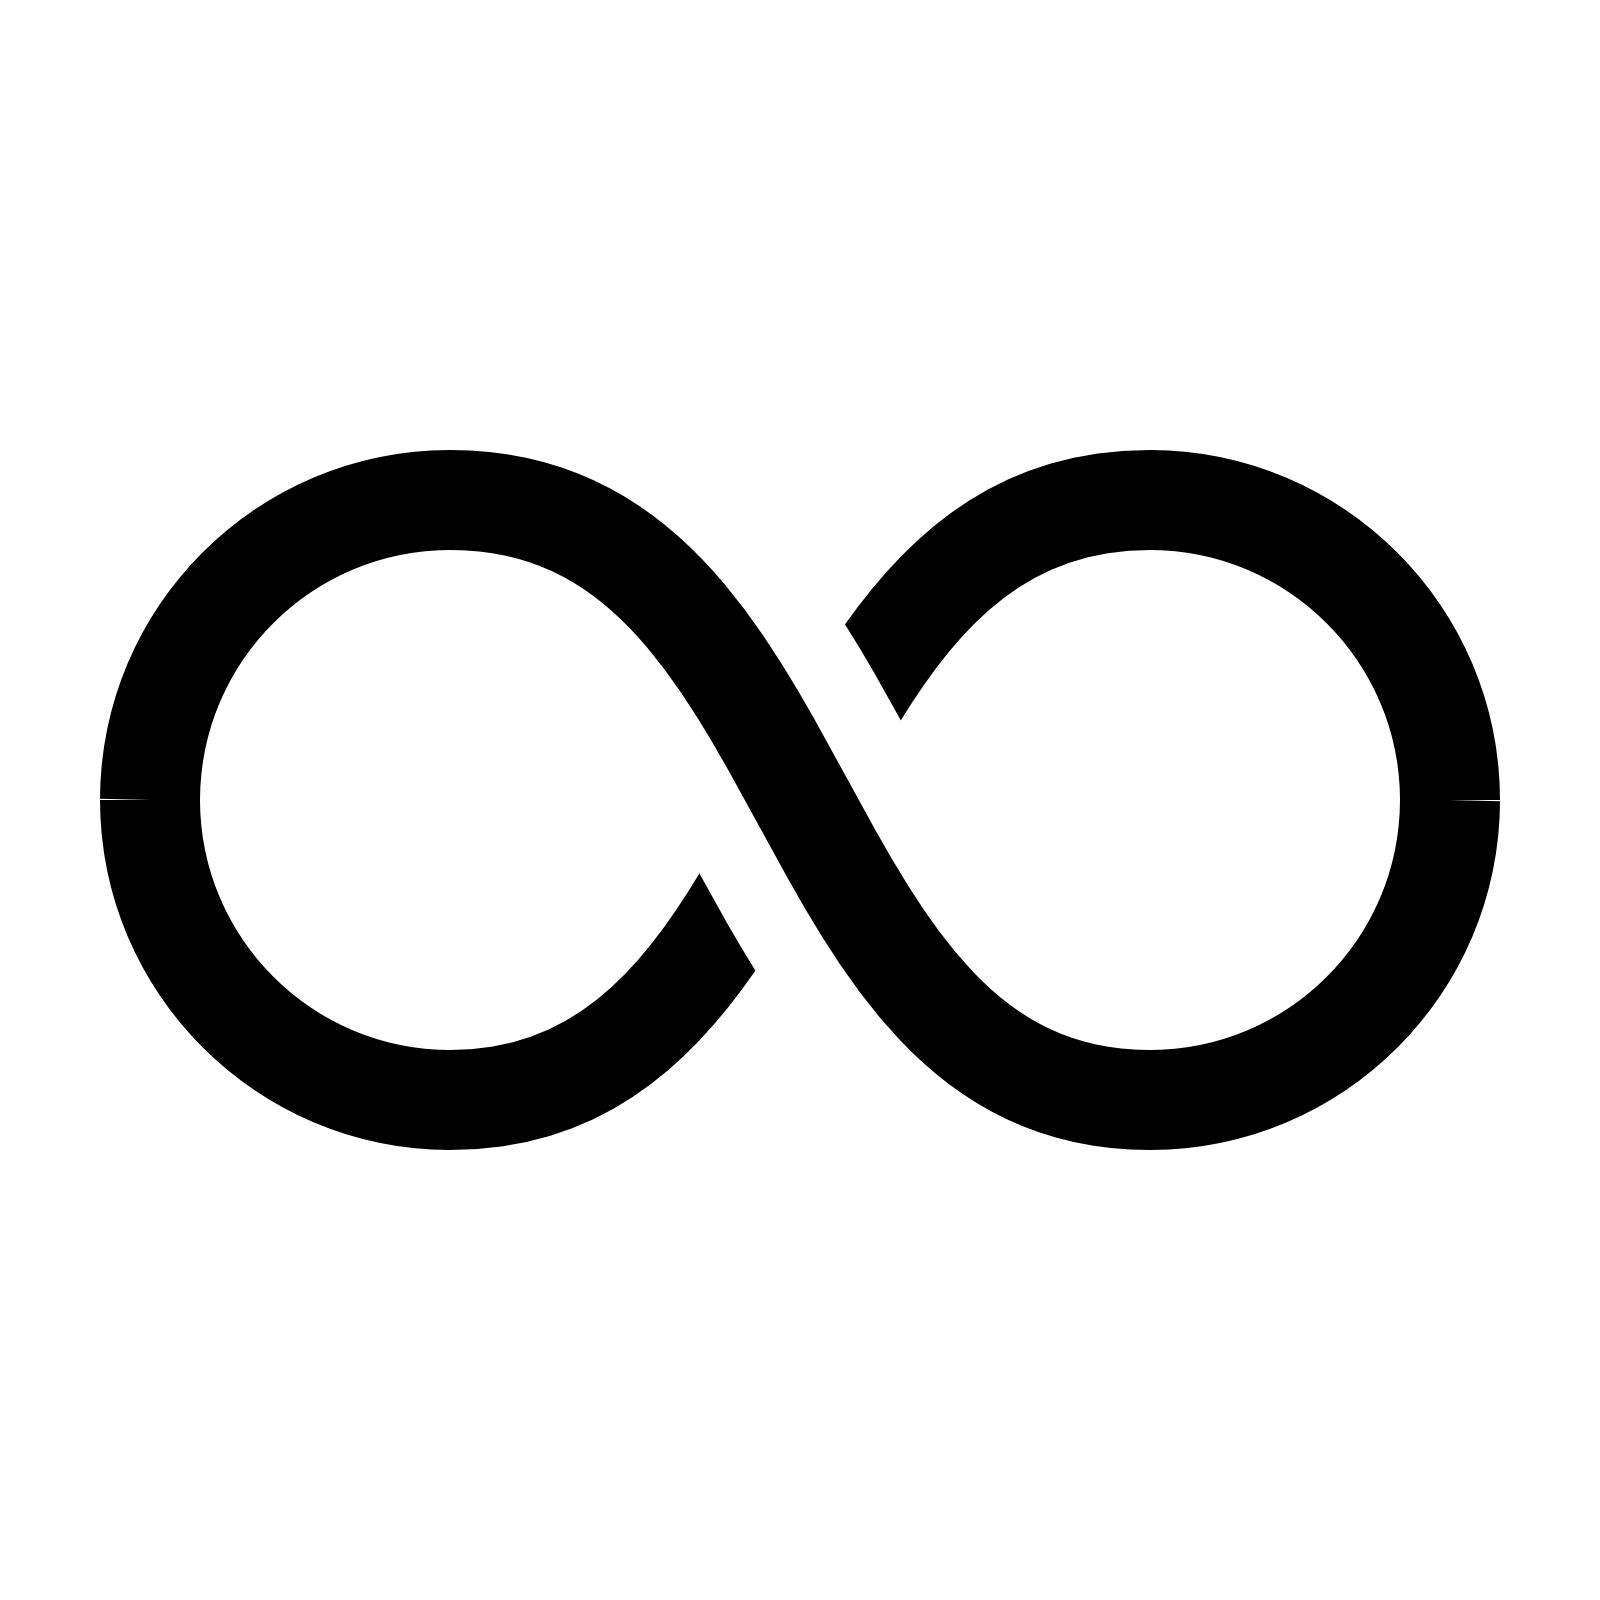 Infinity Symbol Icon At Vectorified Com Collection Of Infinity Symbol Icon Free For Personal Use